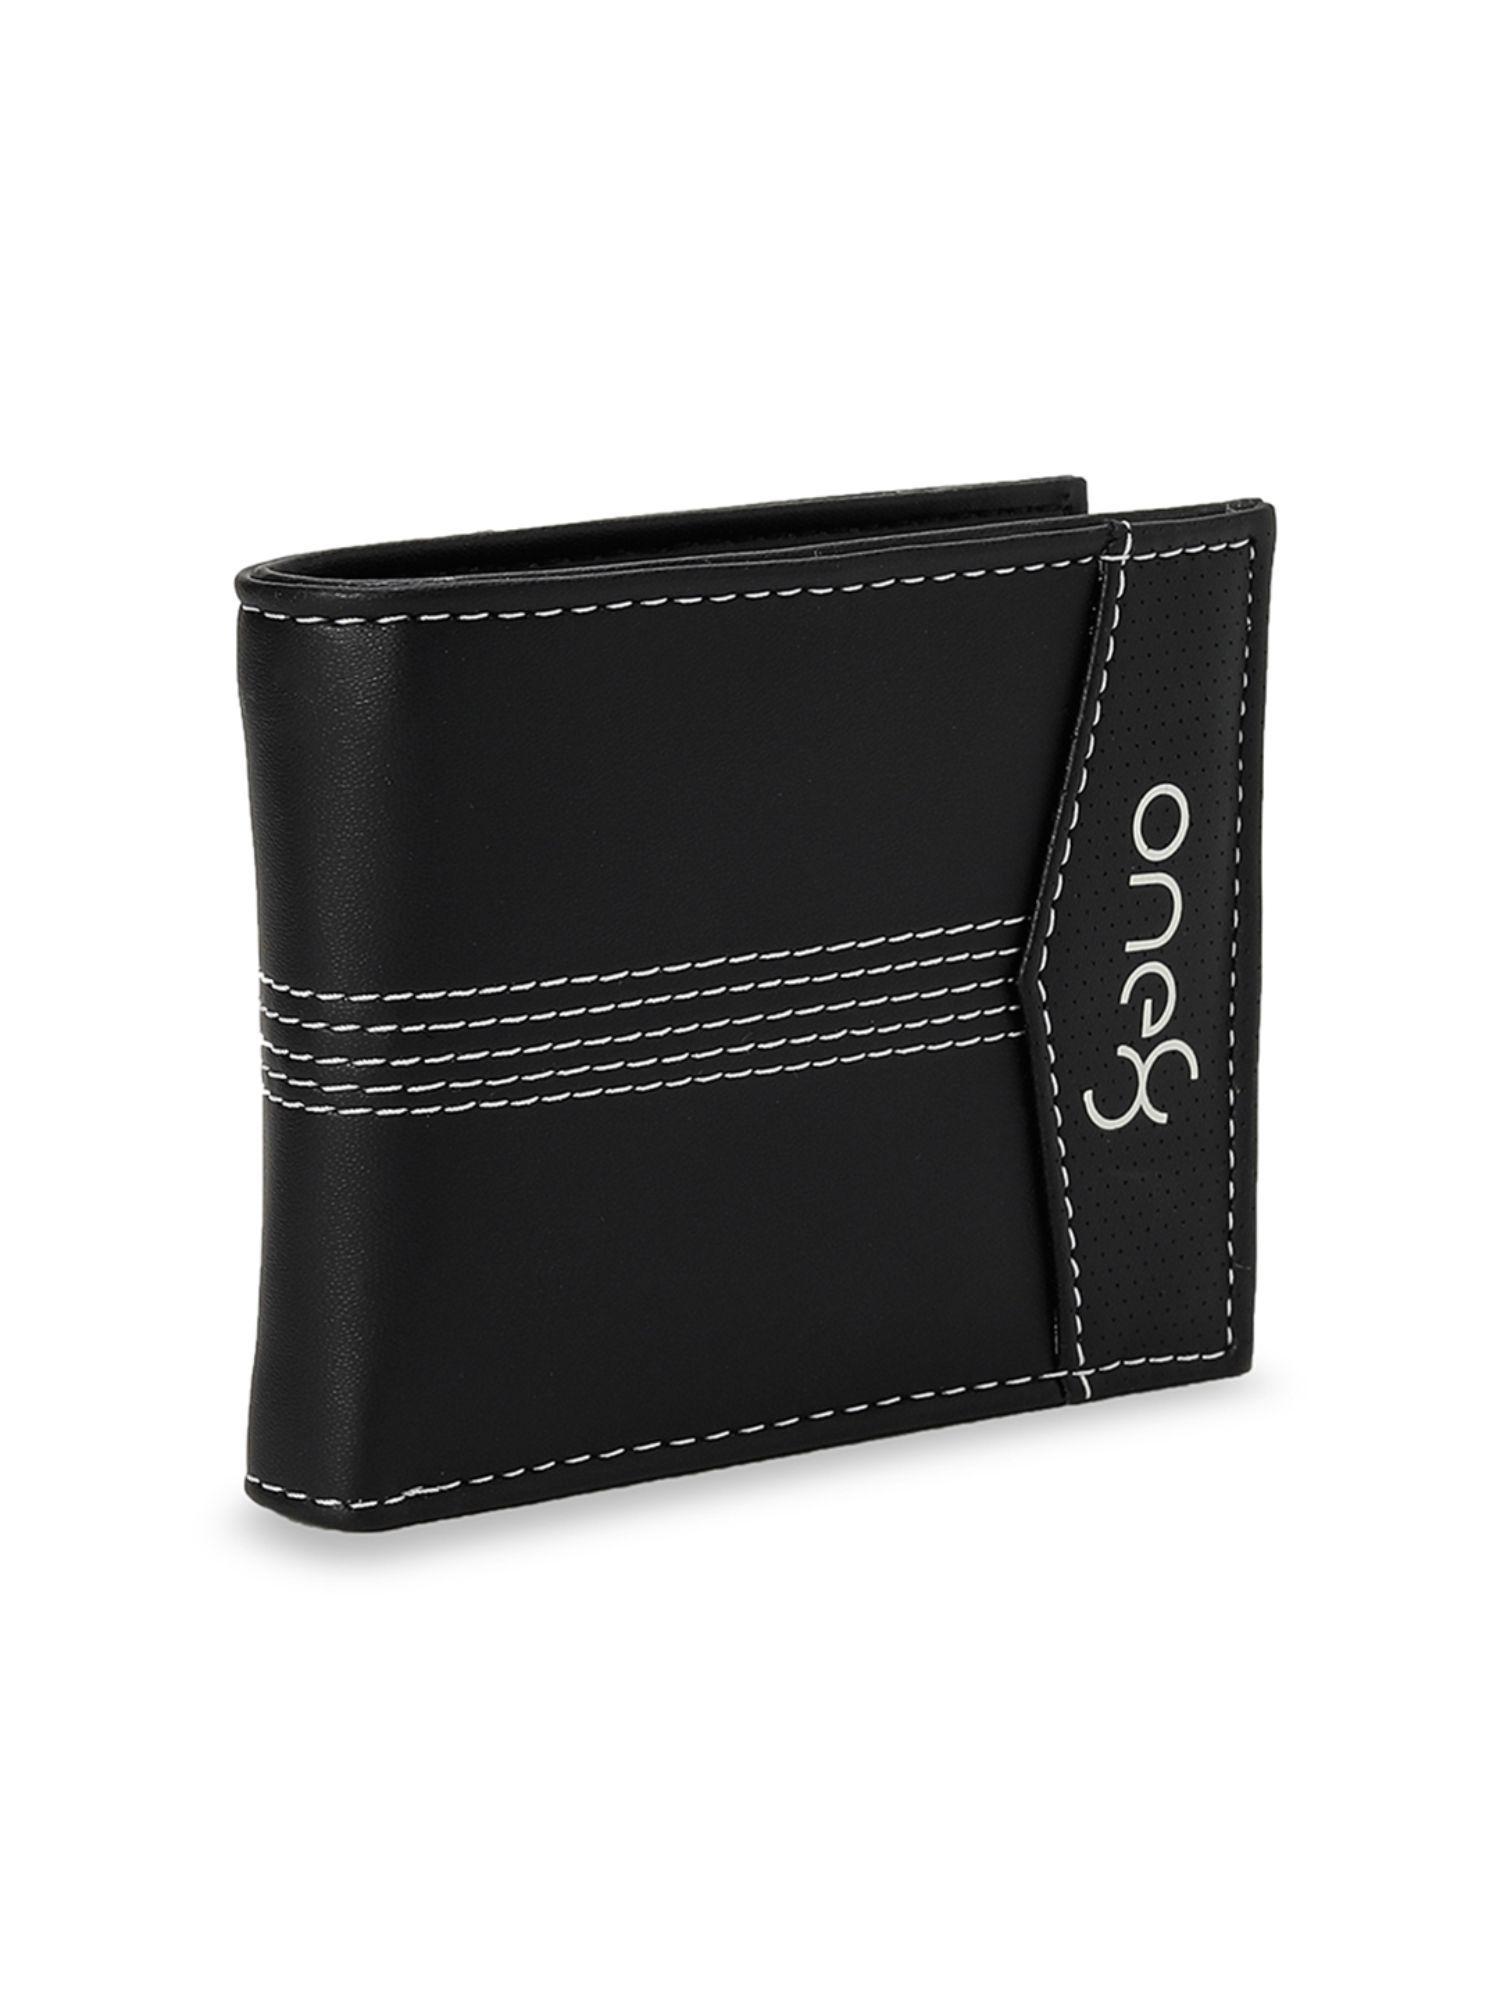 x one8 iconic unisex black wallet